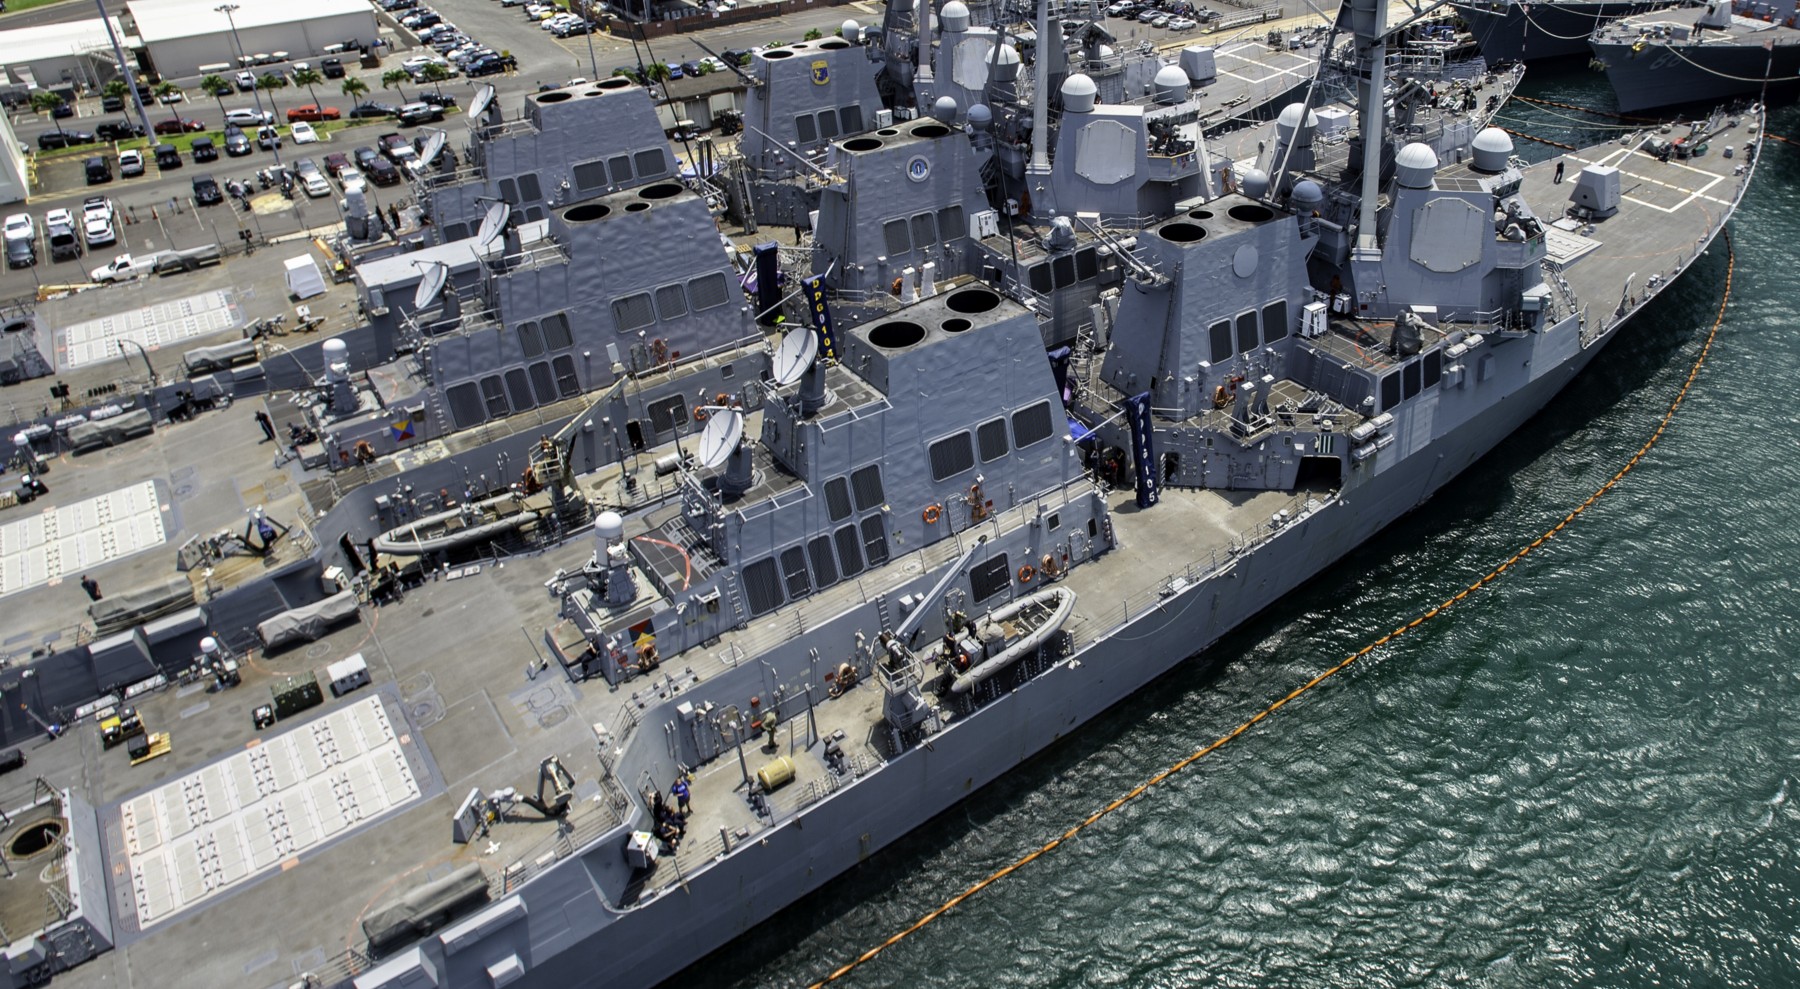 ddg-110 uss dewey arleigh burke class guided missile destroyer aegis us navy pearl harbor hawaii rimpac 92